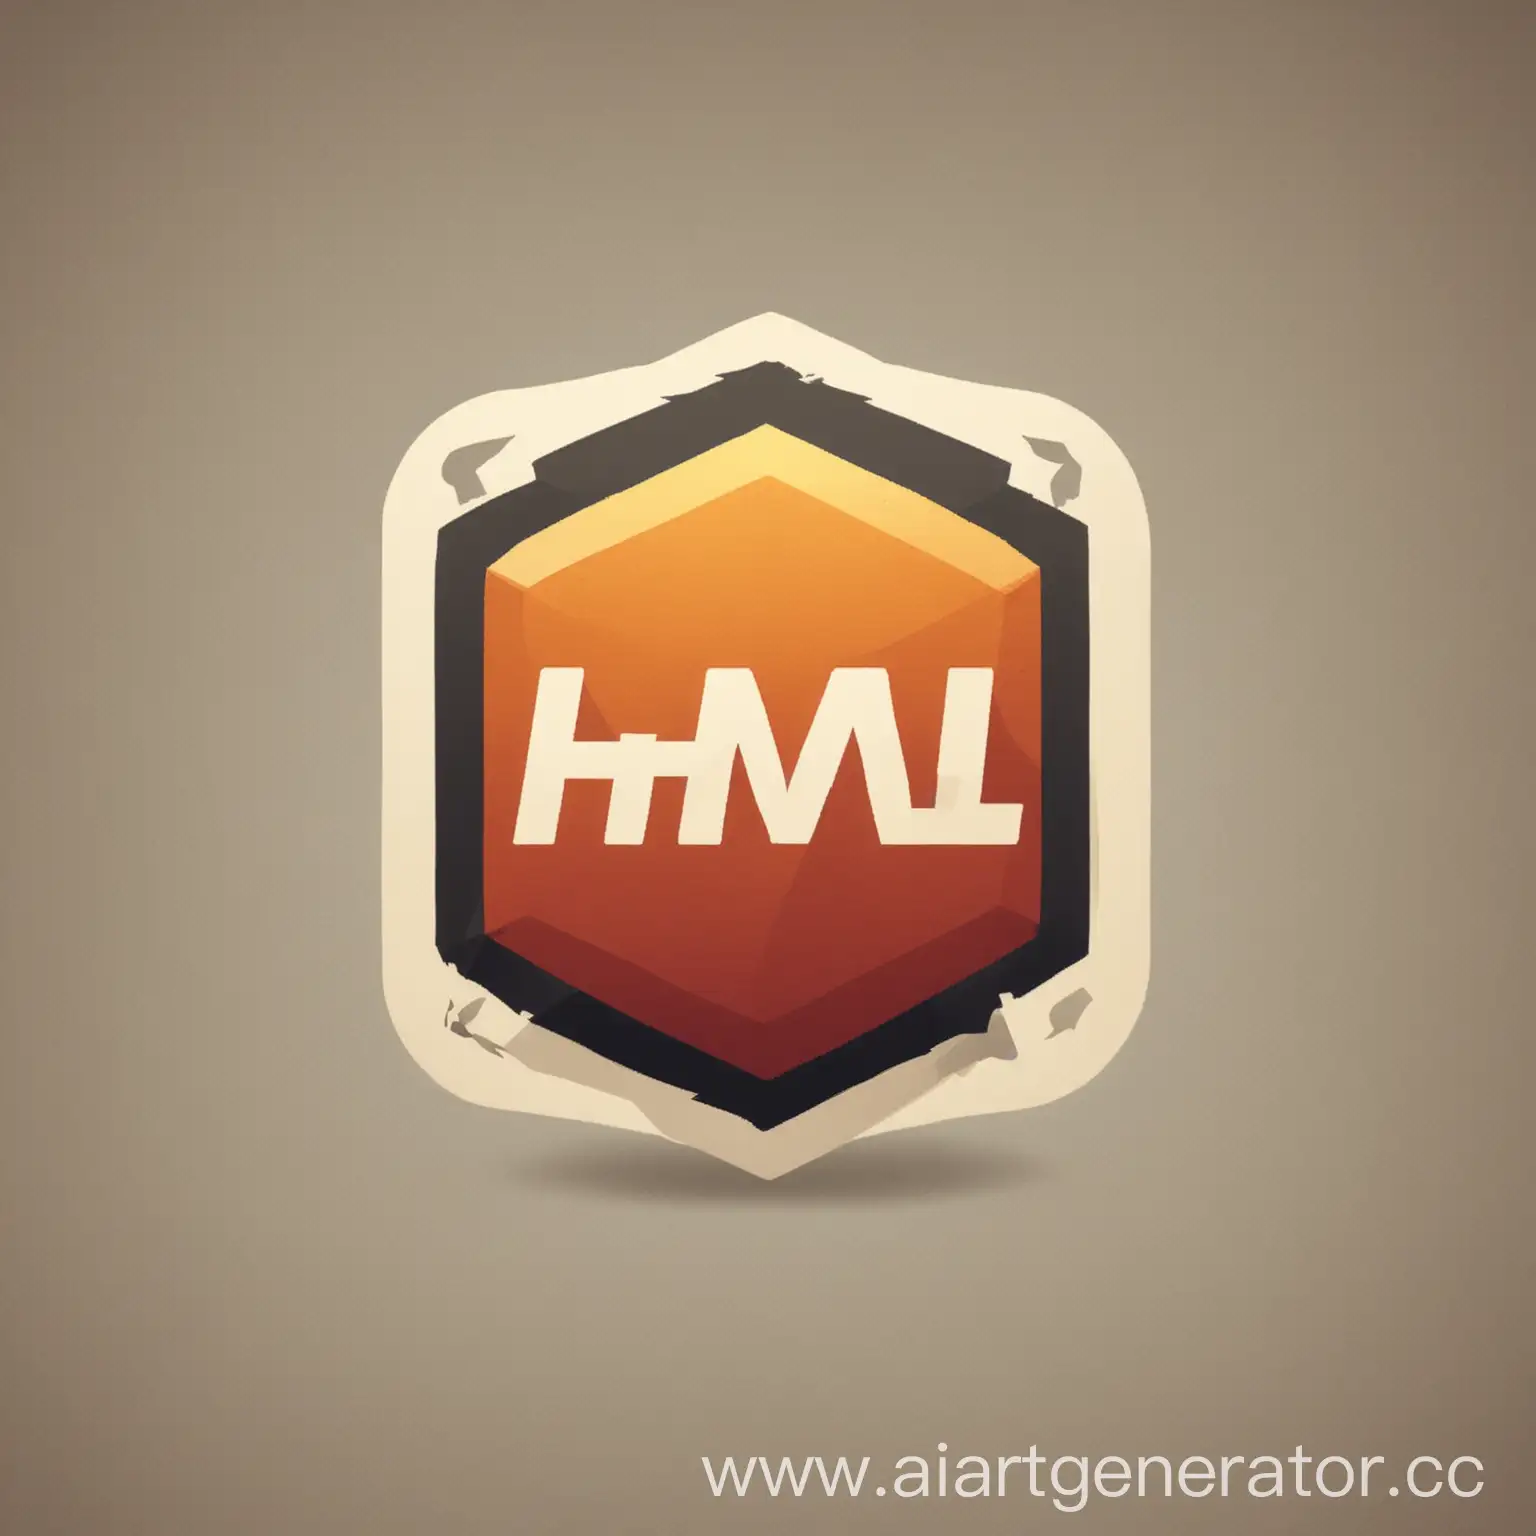 сгенерируй картину с логотипами HTML, CSS, Java Script, PHP.